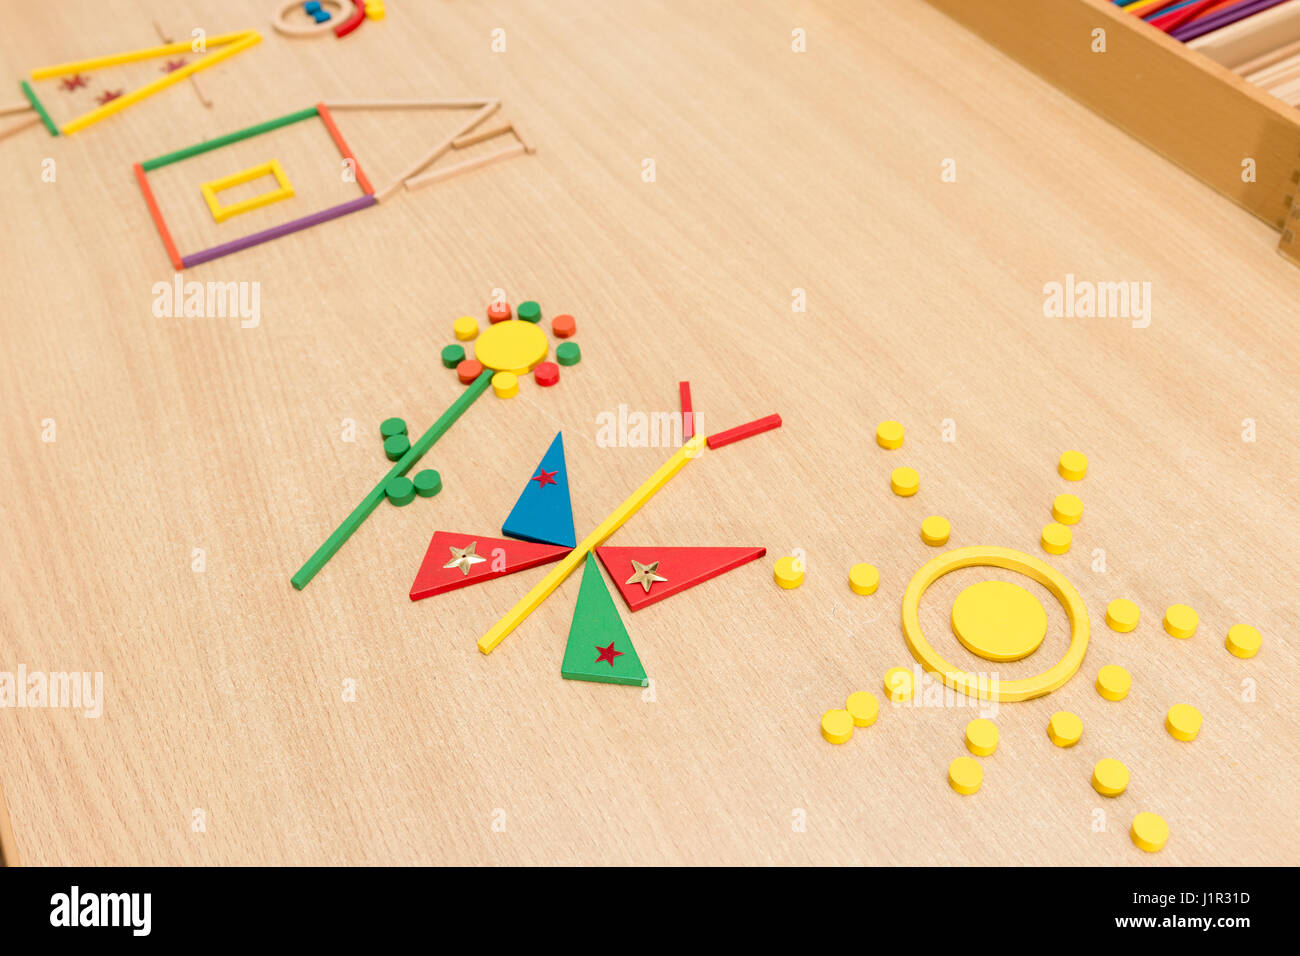 colored sticks for folding figures for children's development Stock Photo